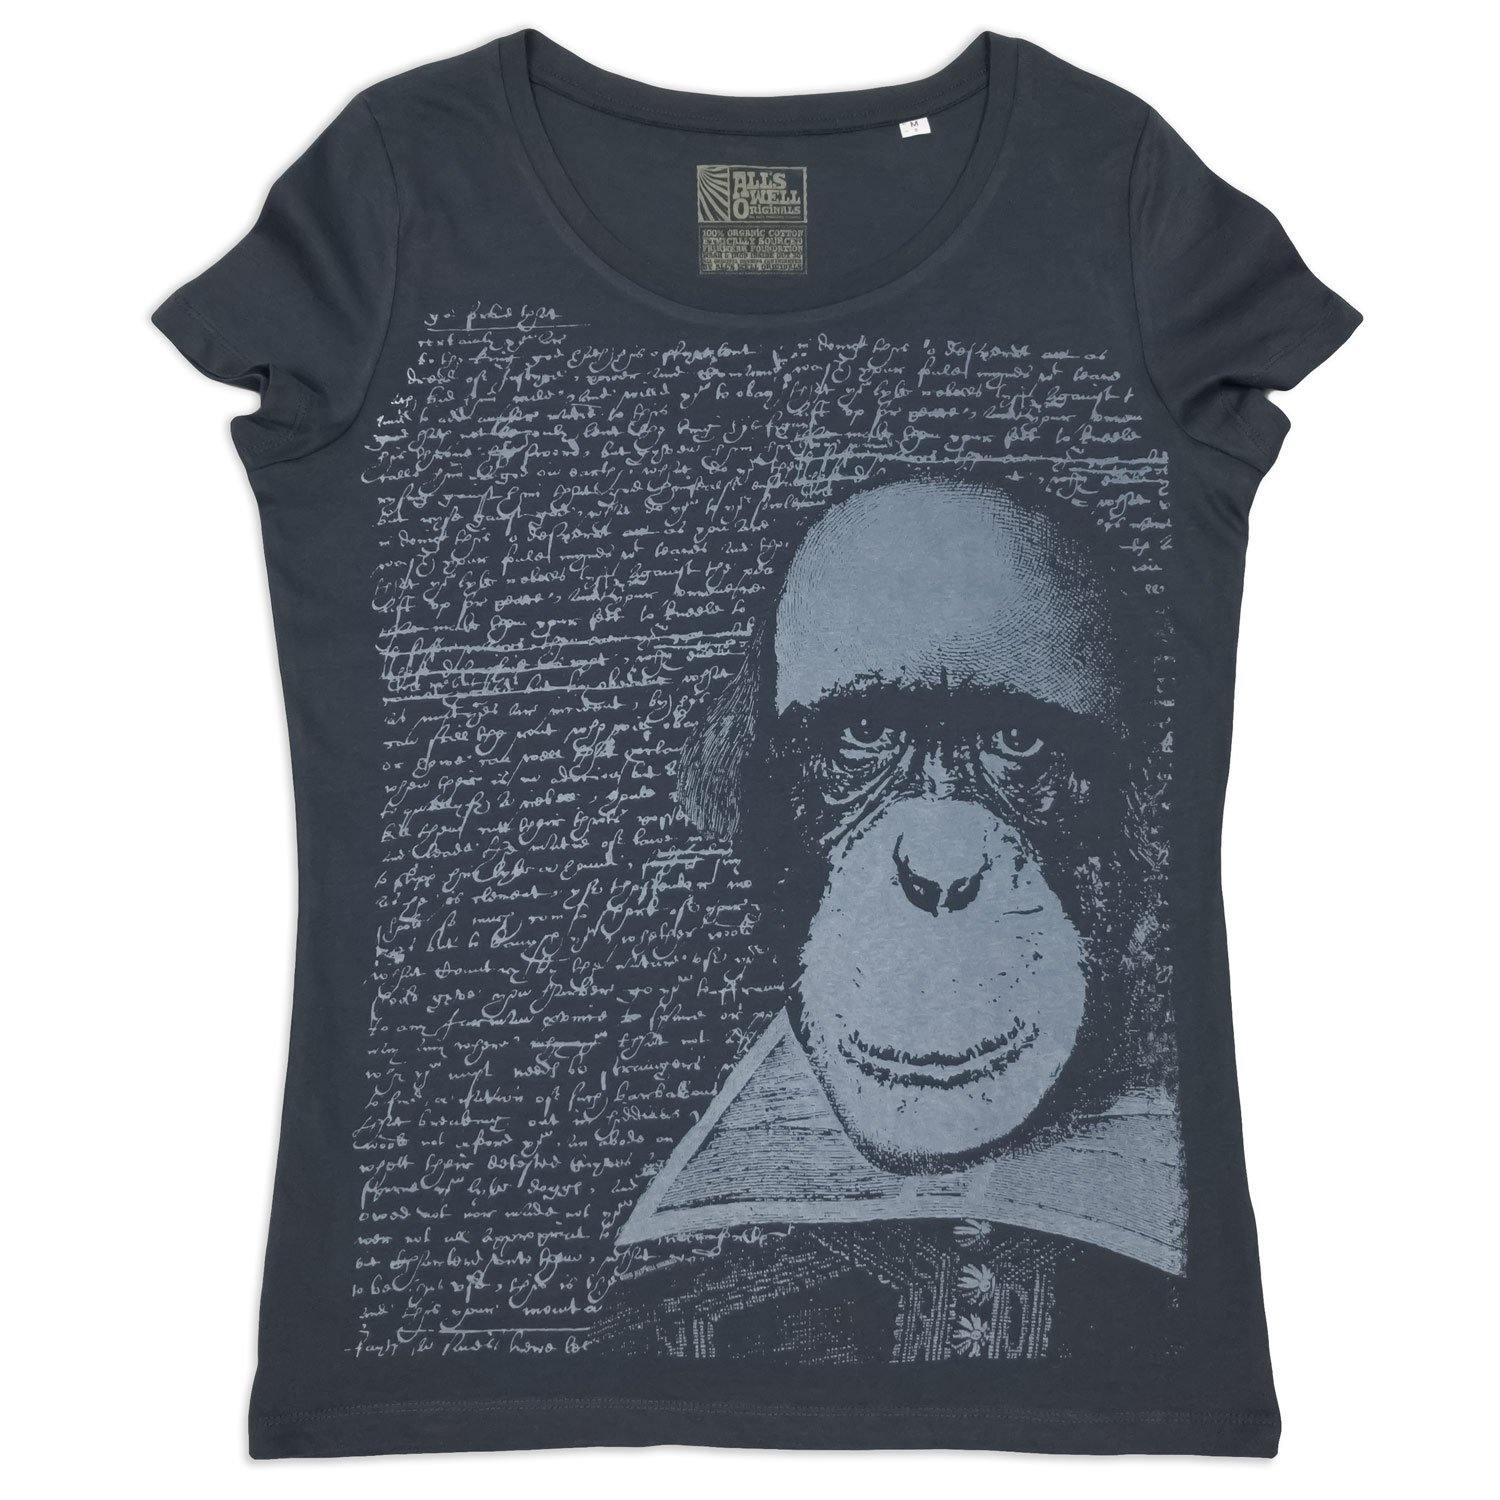 Apespeare Shakespeare t-shirt hand printed 100% organic cotton t-shirt